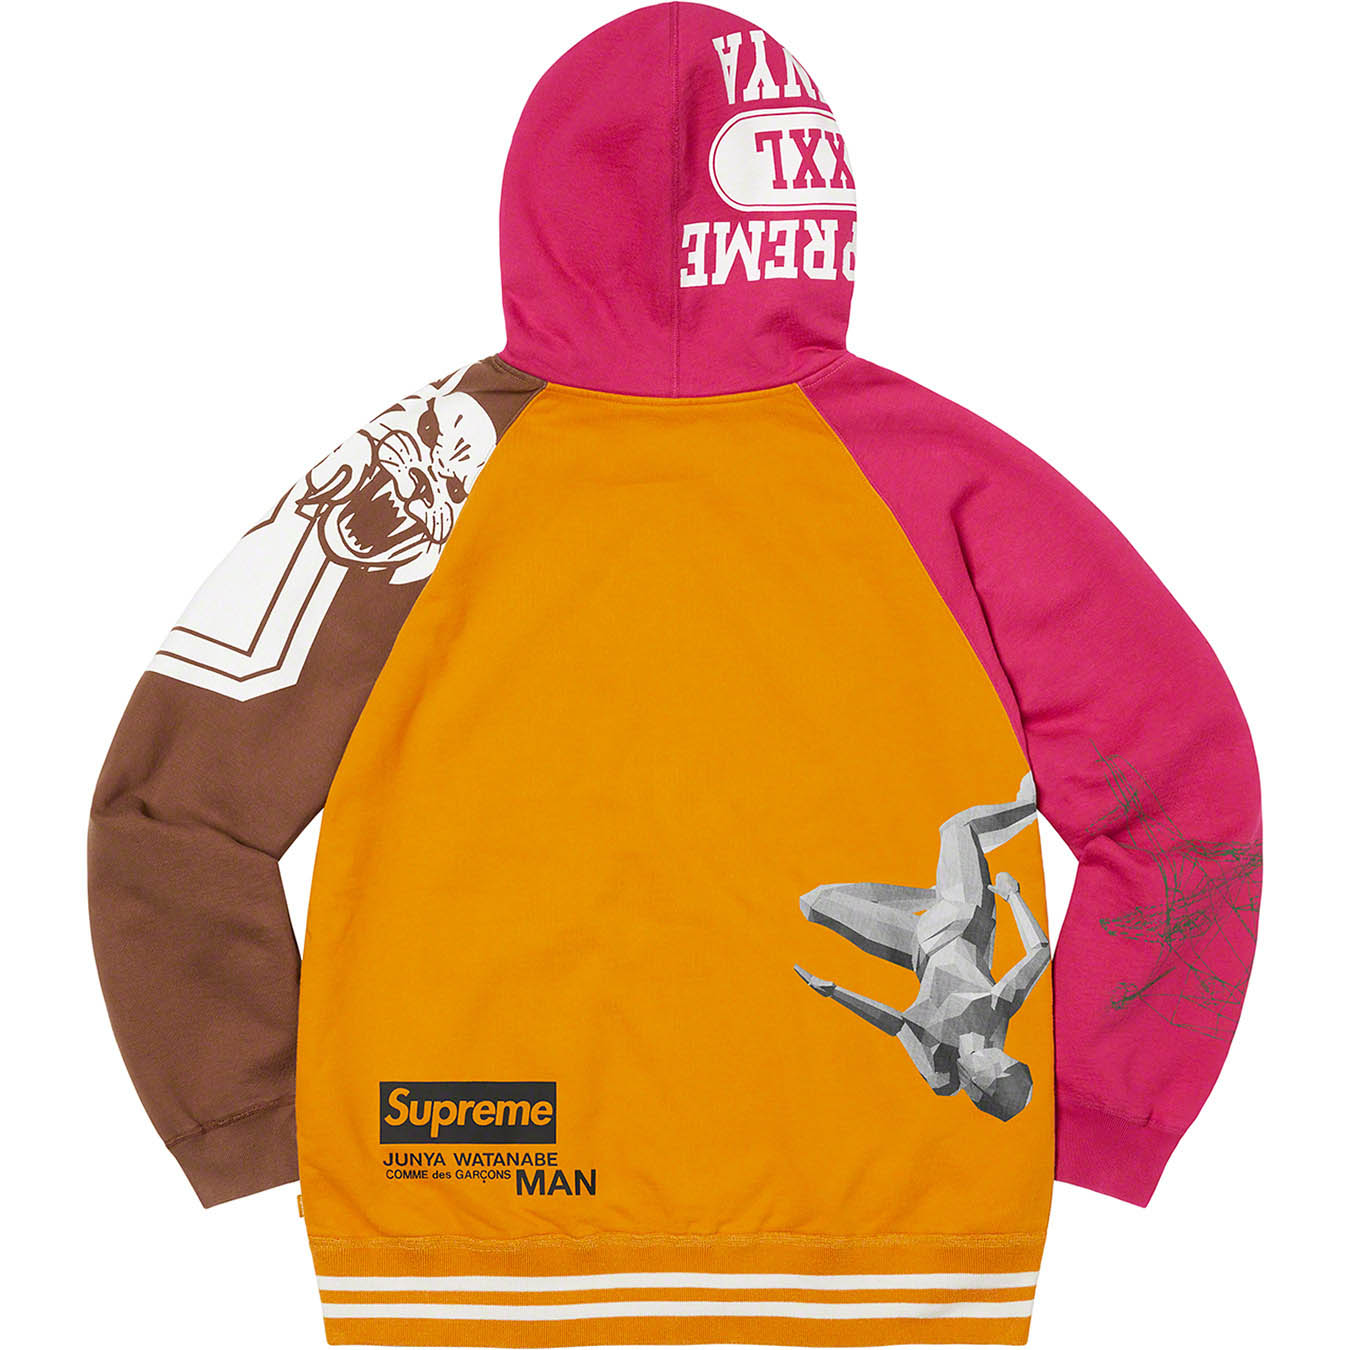 Supreme®/JUNYA WATANABE COMME des GARÇONS MAN Zip Up Hooded Sweatshirt